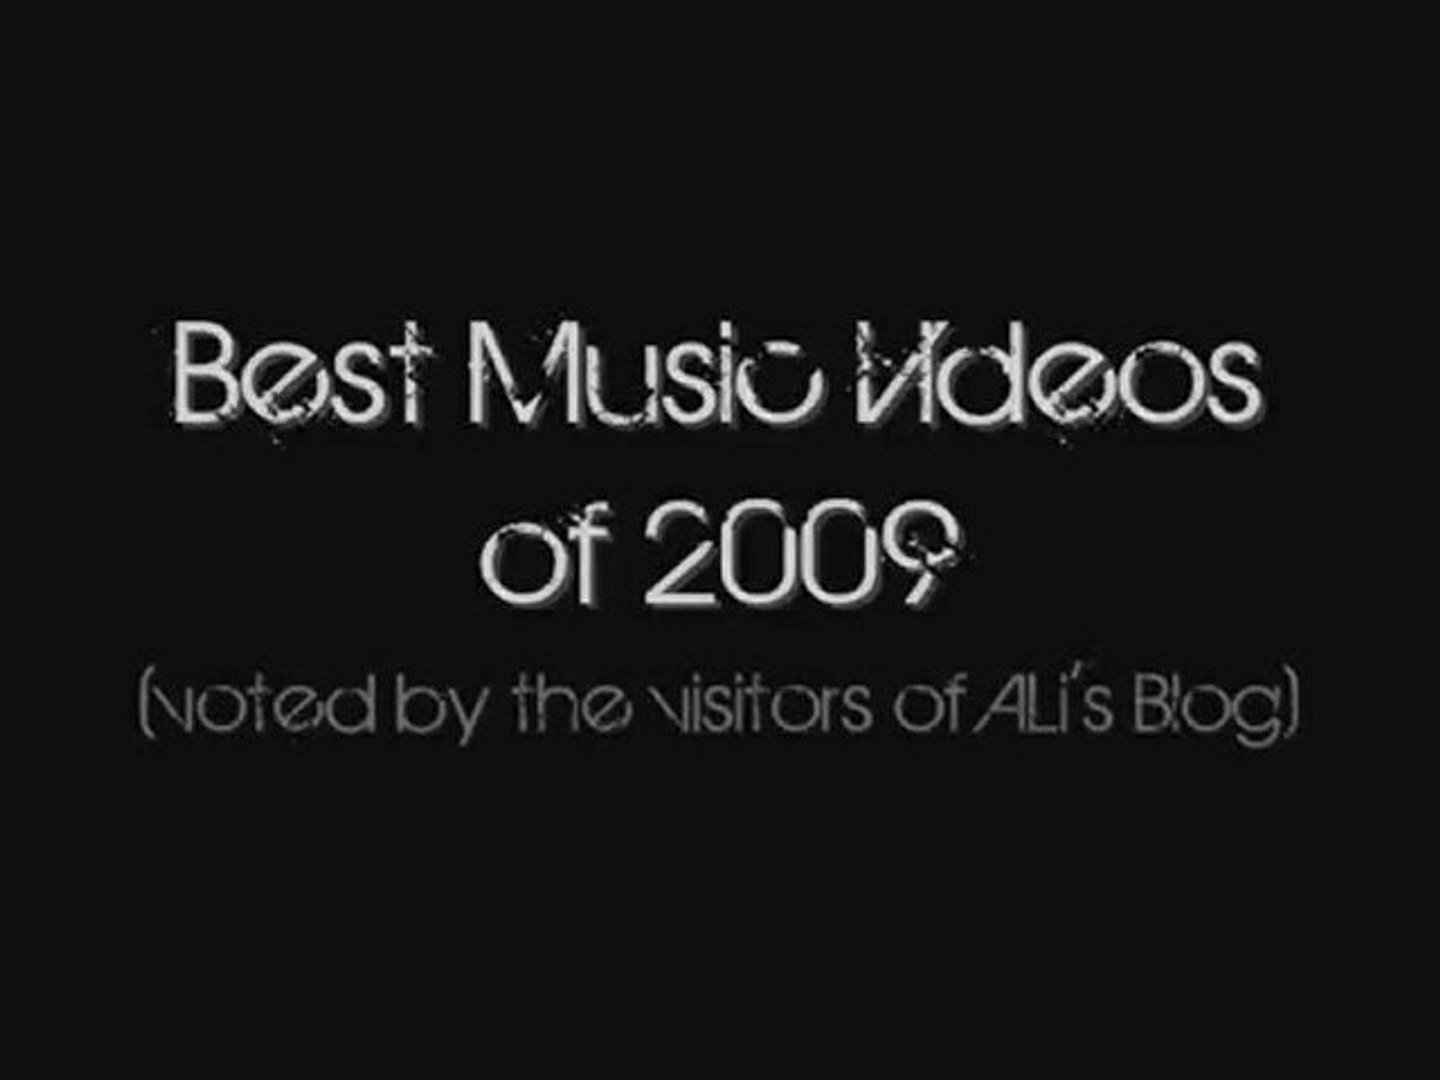 ALi's Blog: Best Music Videos of 2009